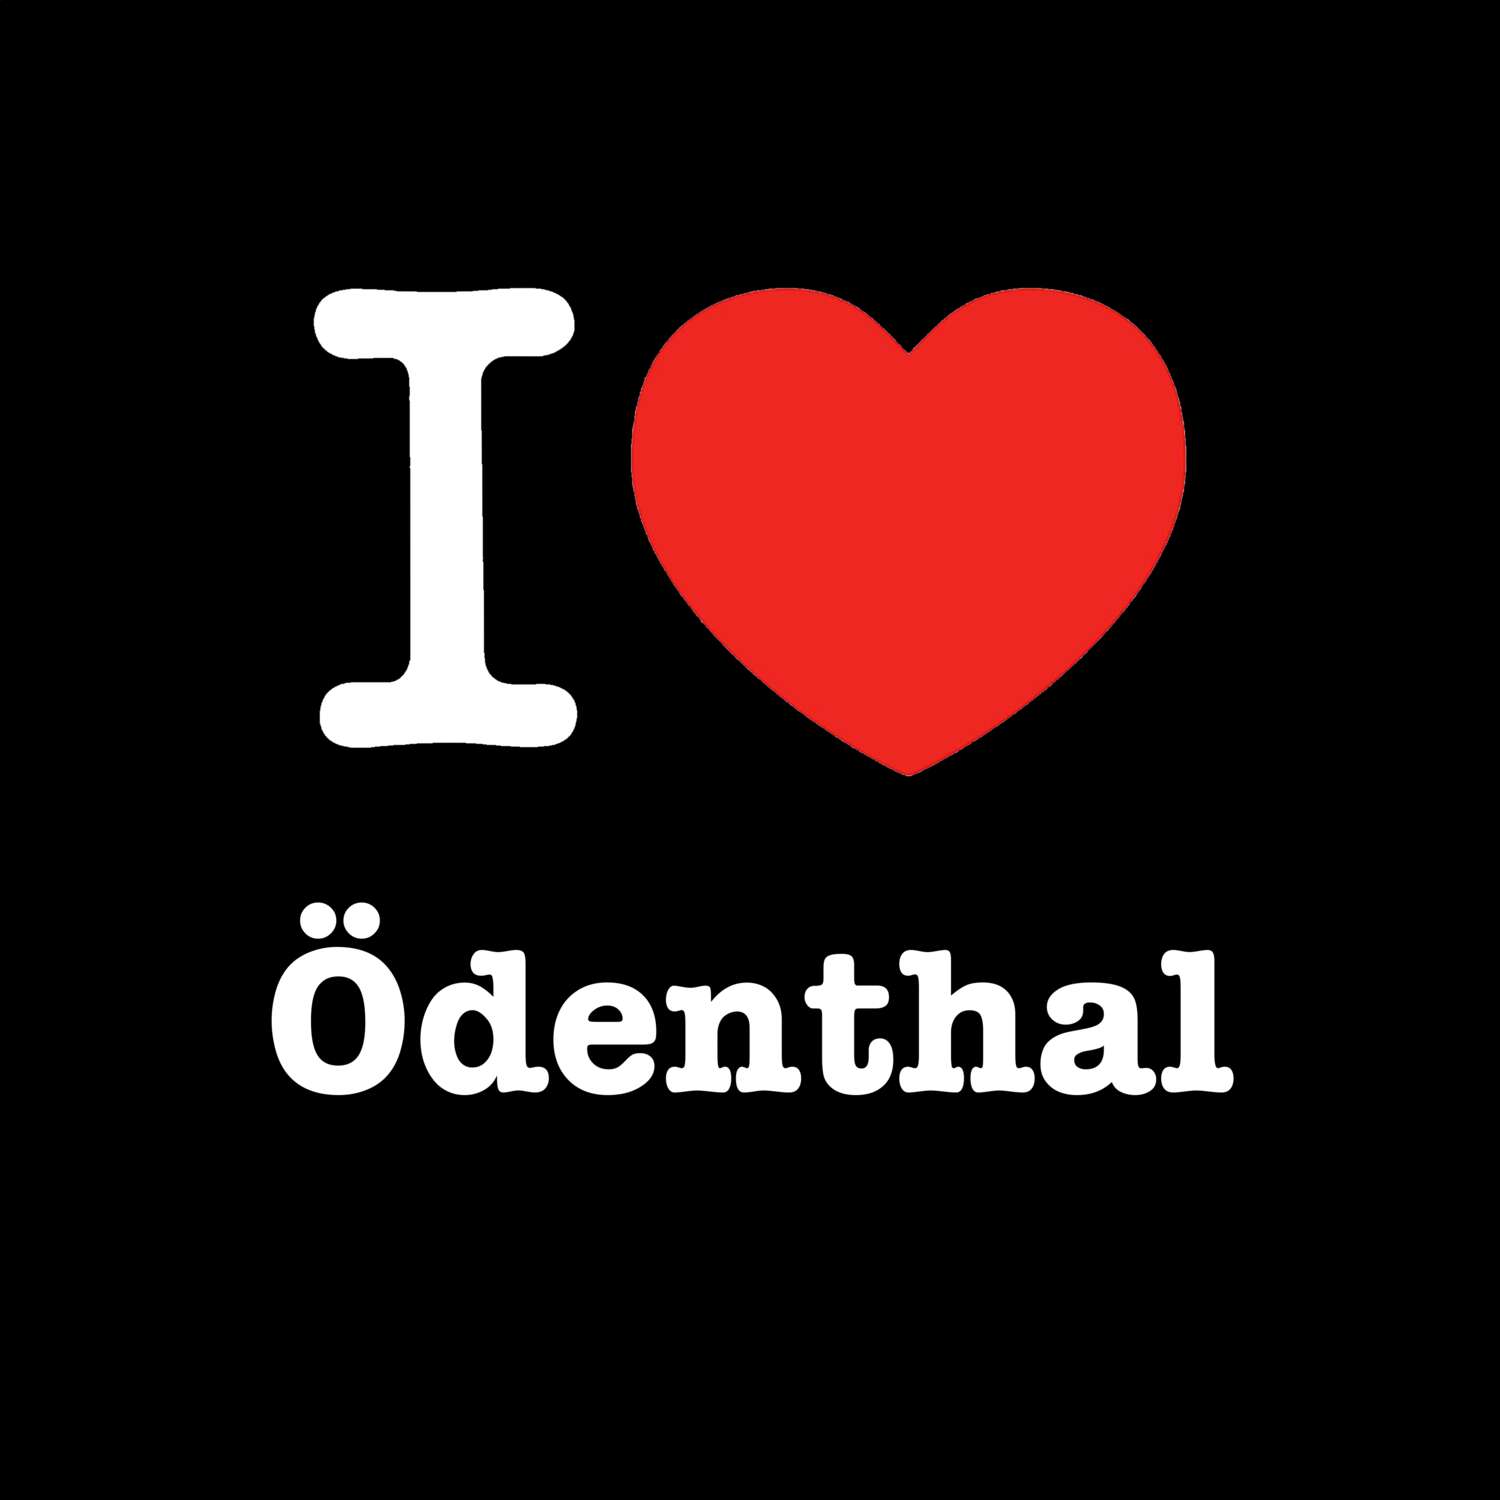 Ödenthal T-Shirt »I love«